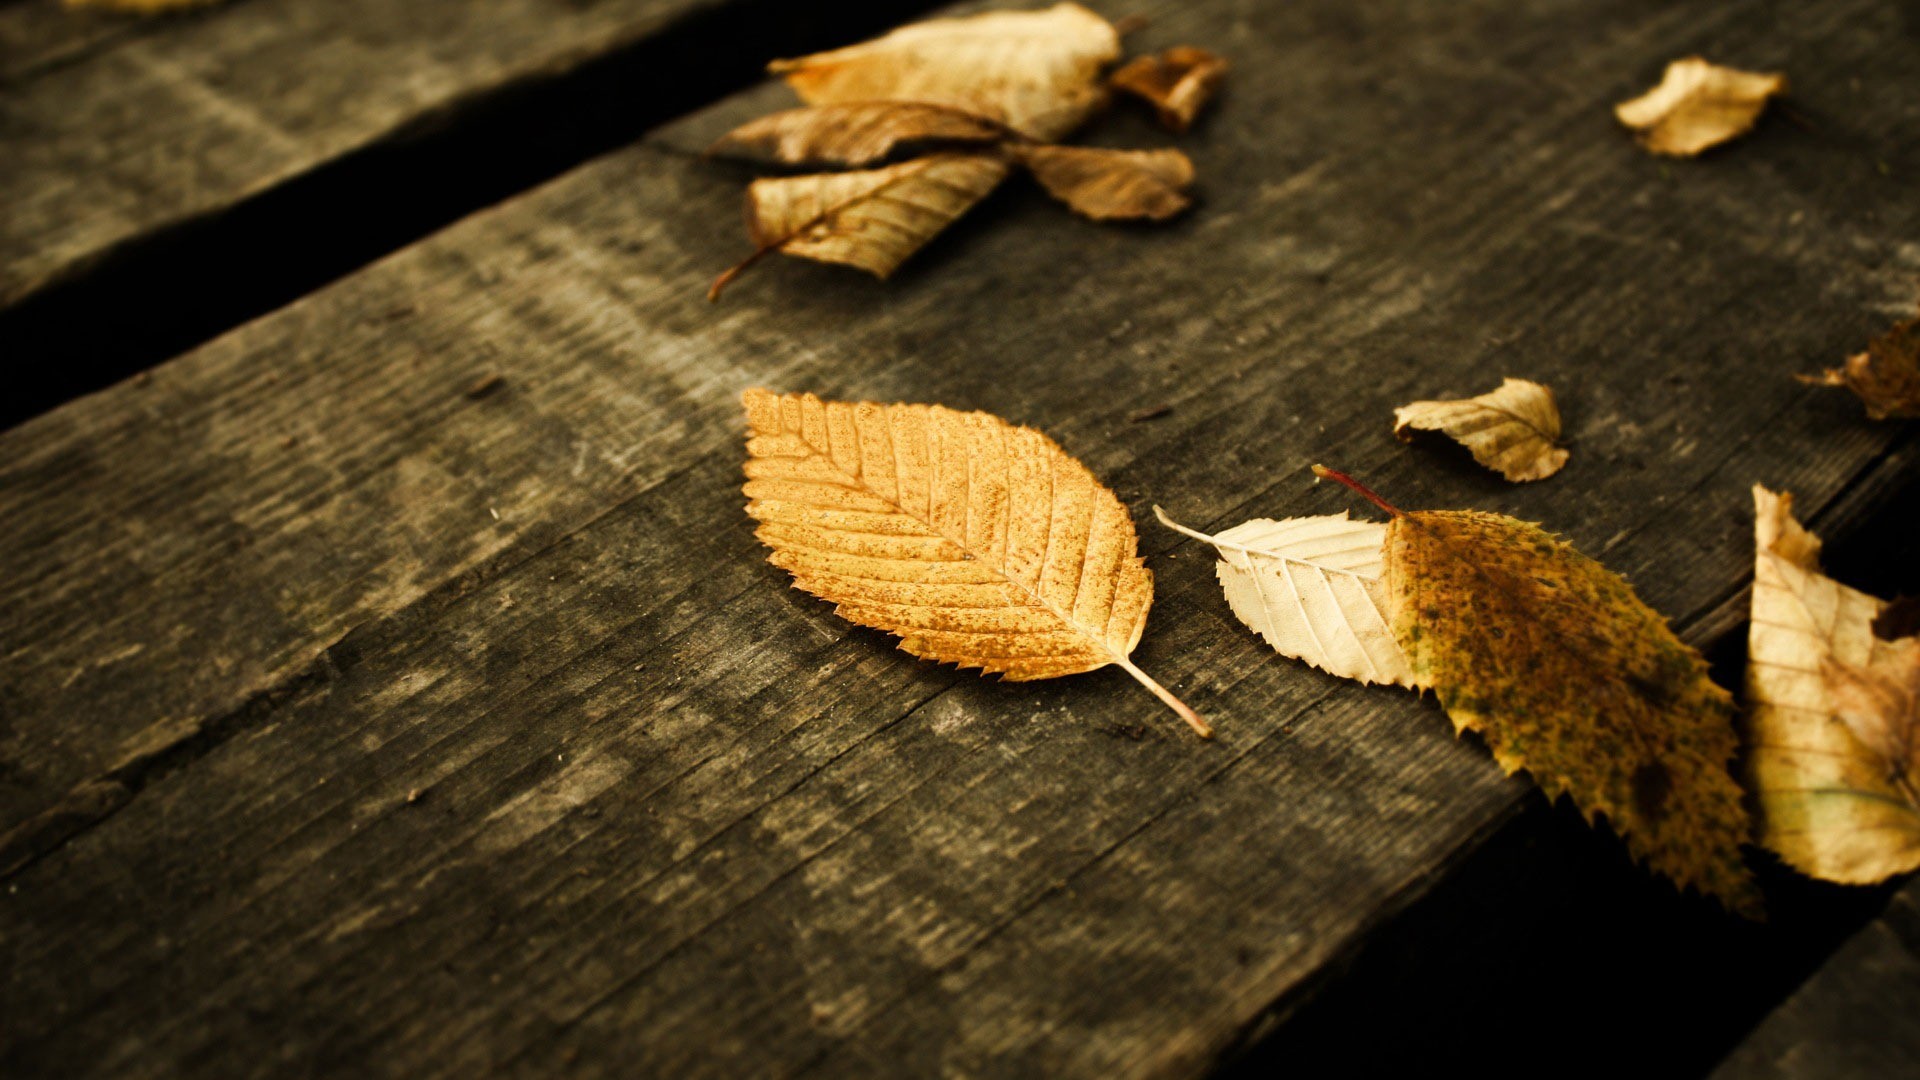 1920x1080 Sfondi Desktop gratis Â· Animali e Natura Â· Natura Autumn wallpapers -  fallen leaves